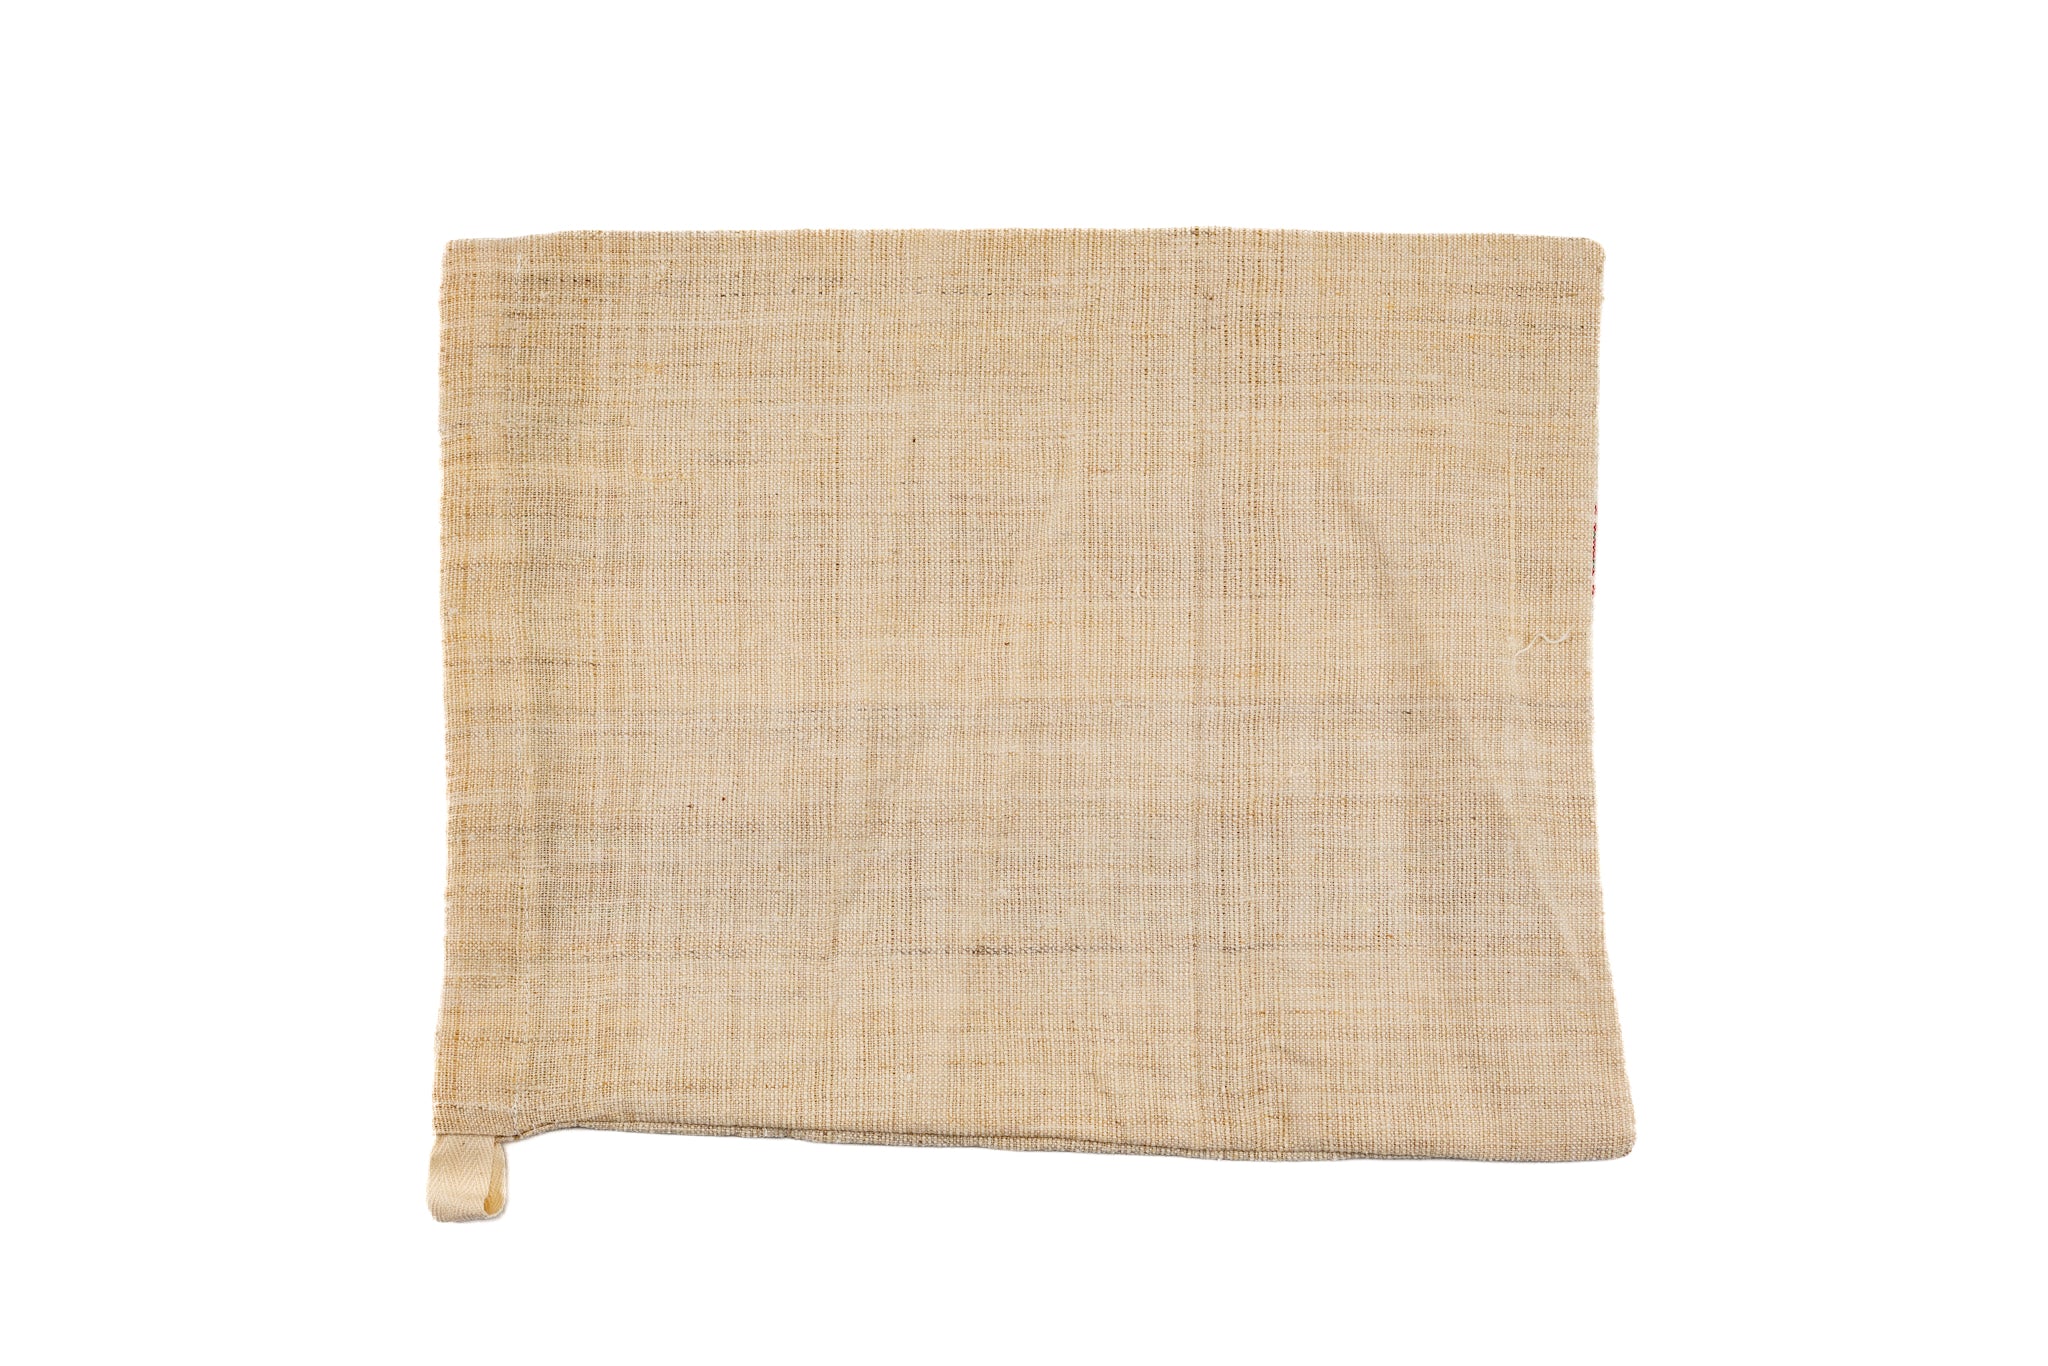 Bag: Handwoven antique and vintage hemp bread bags- BG201